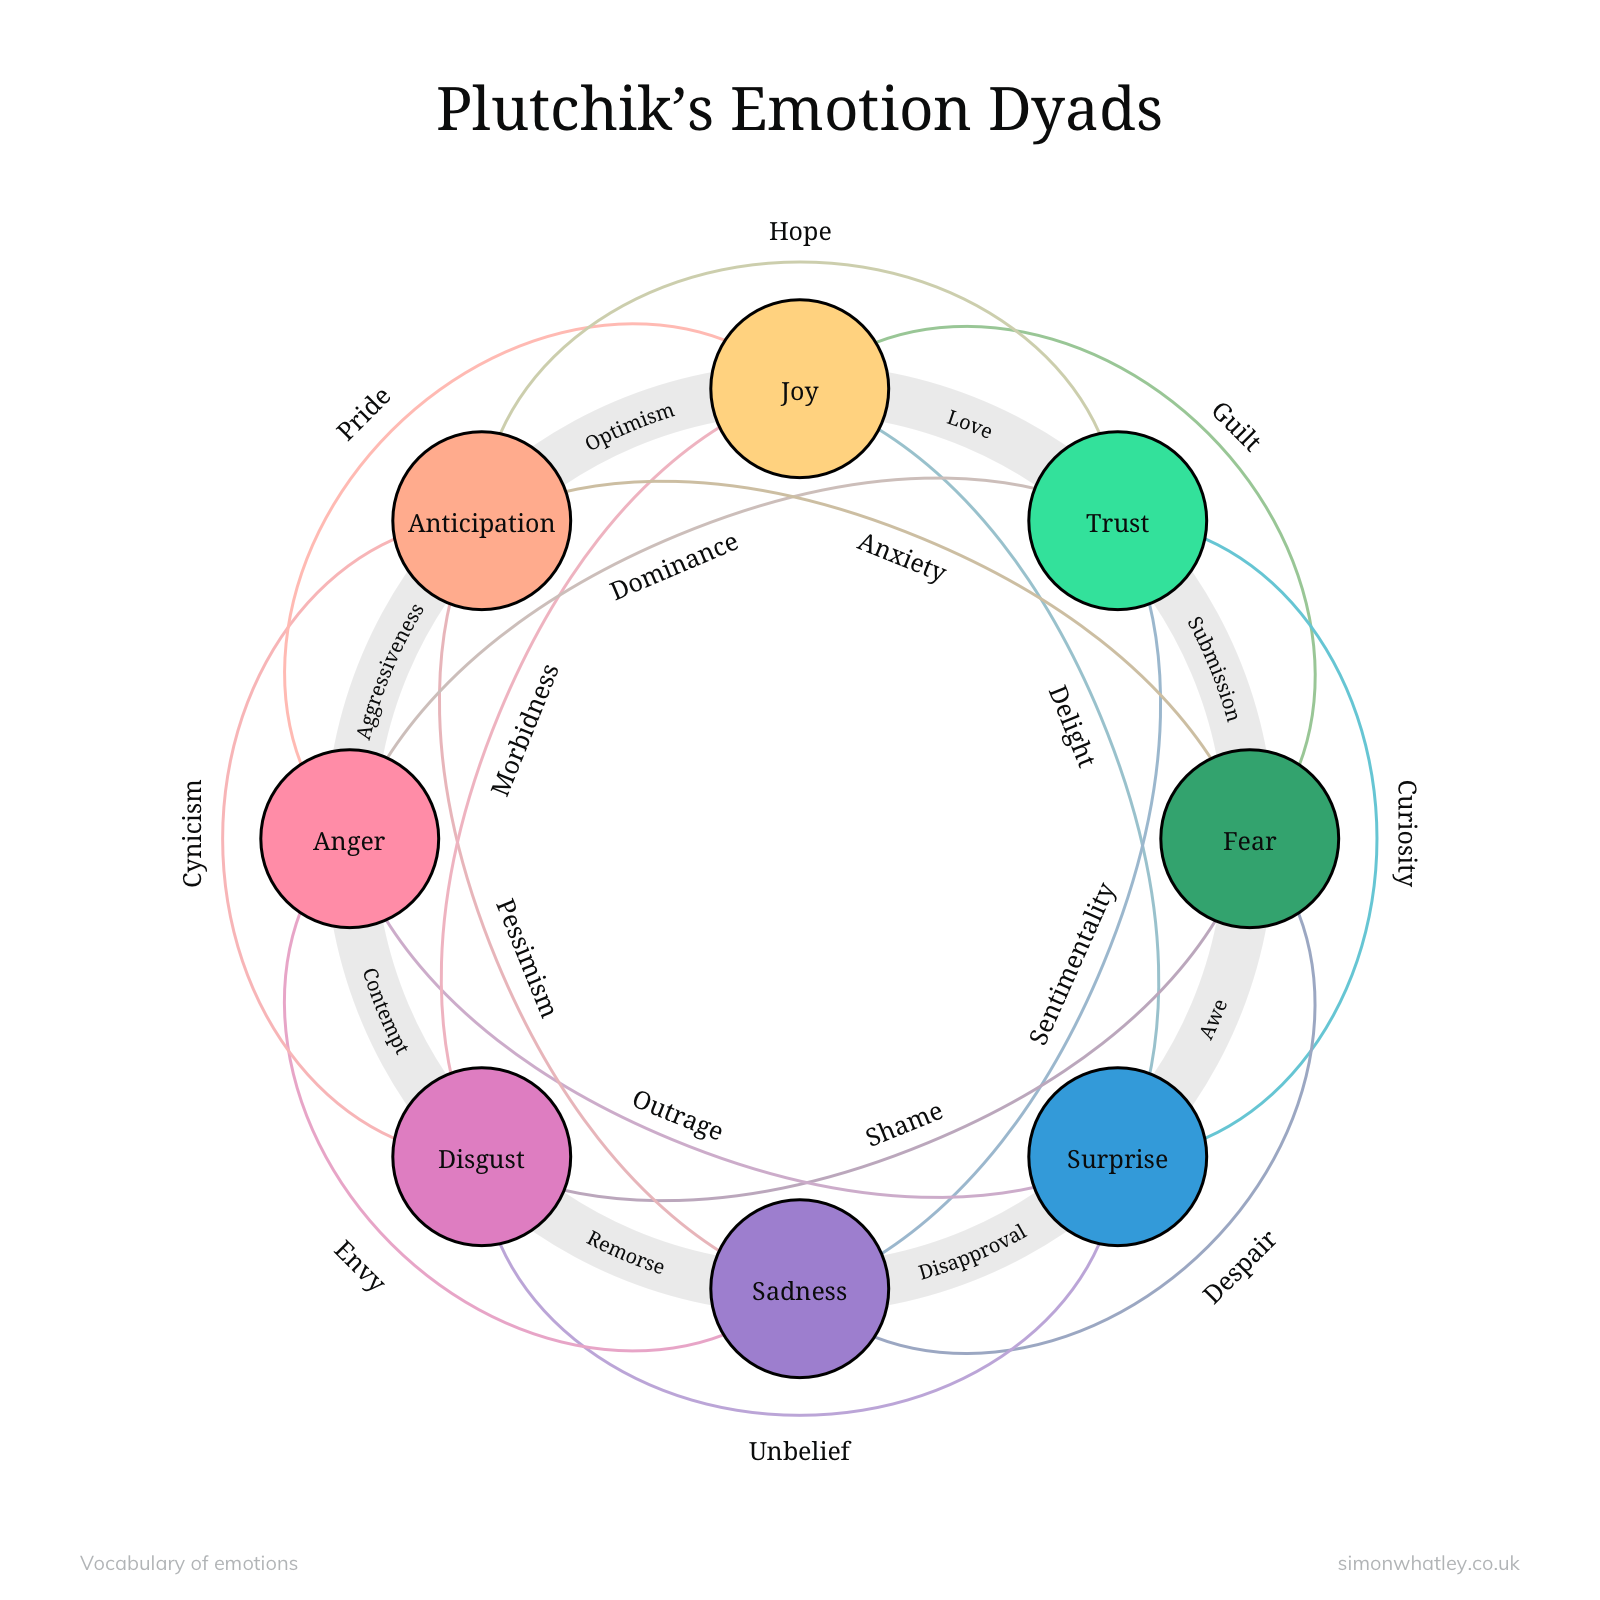 Plutchik’s emotion dyads